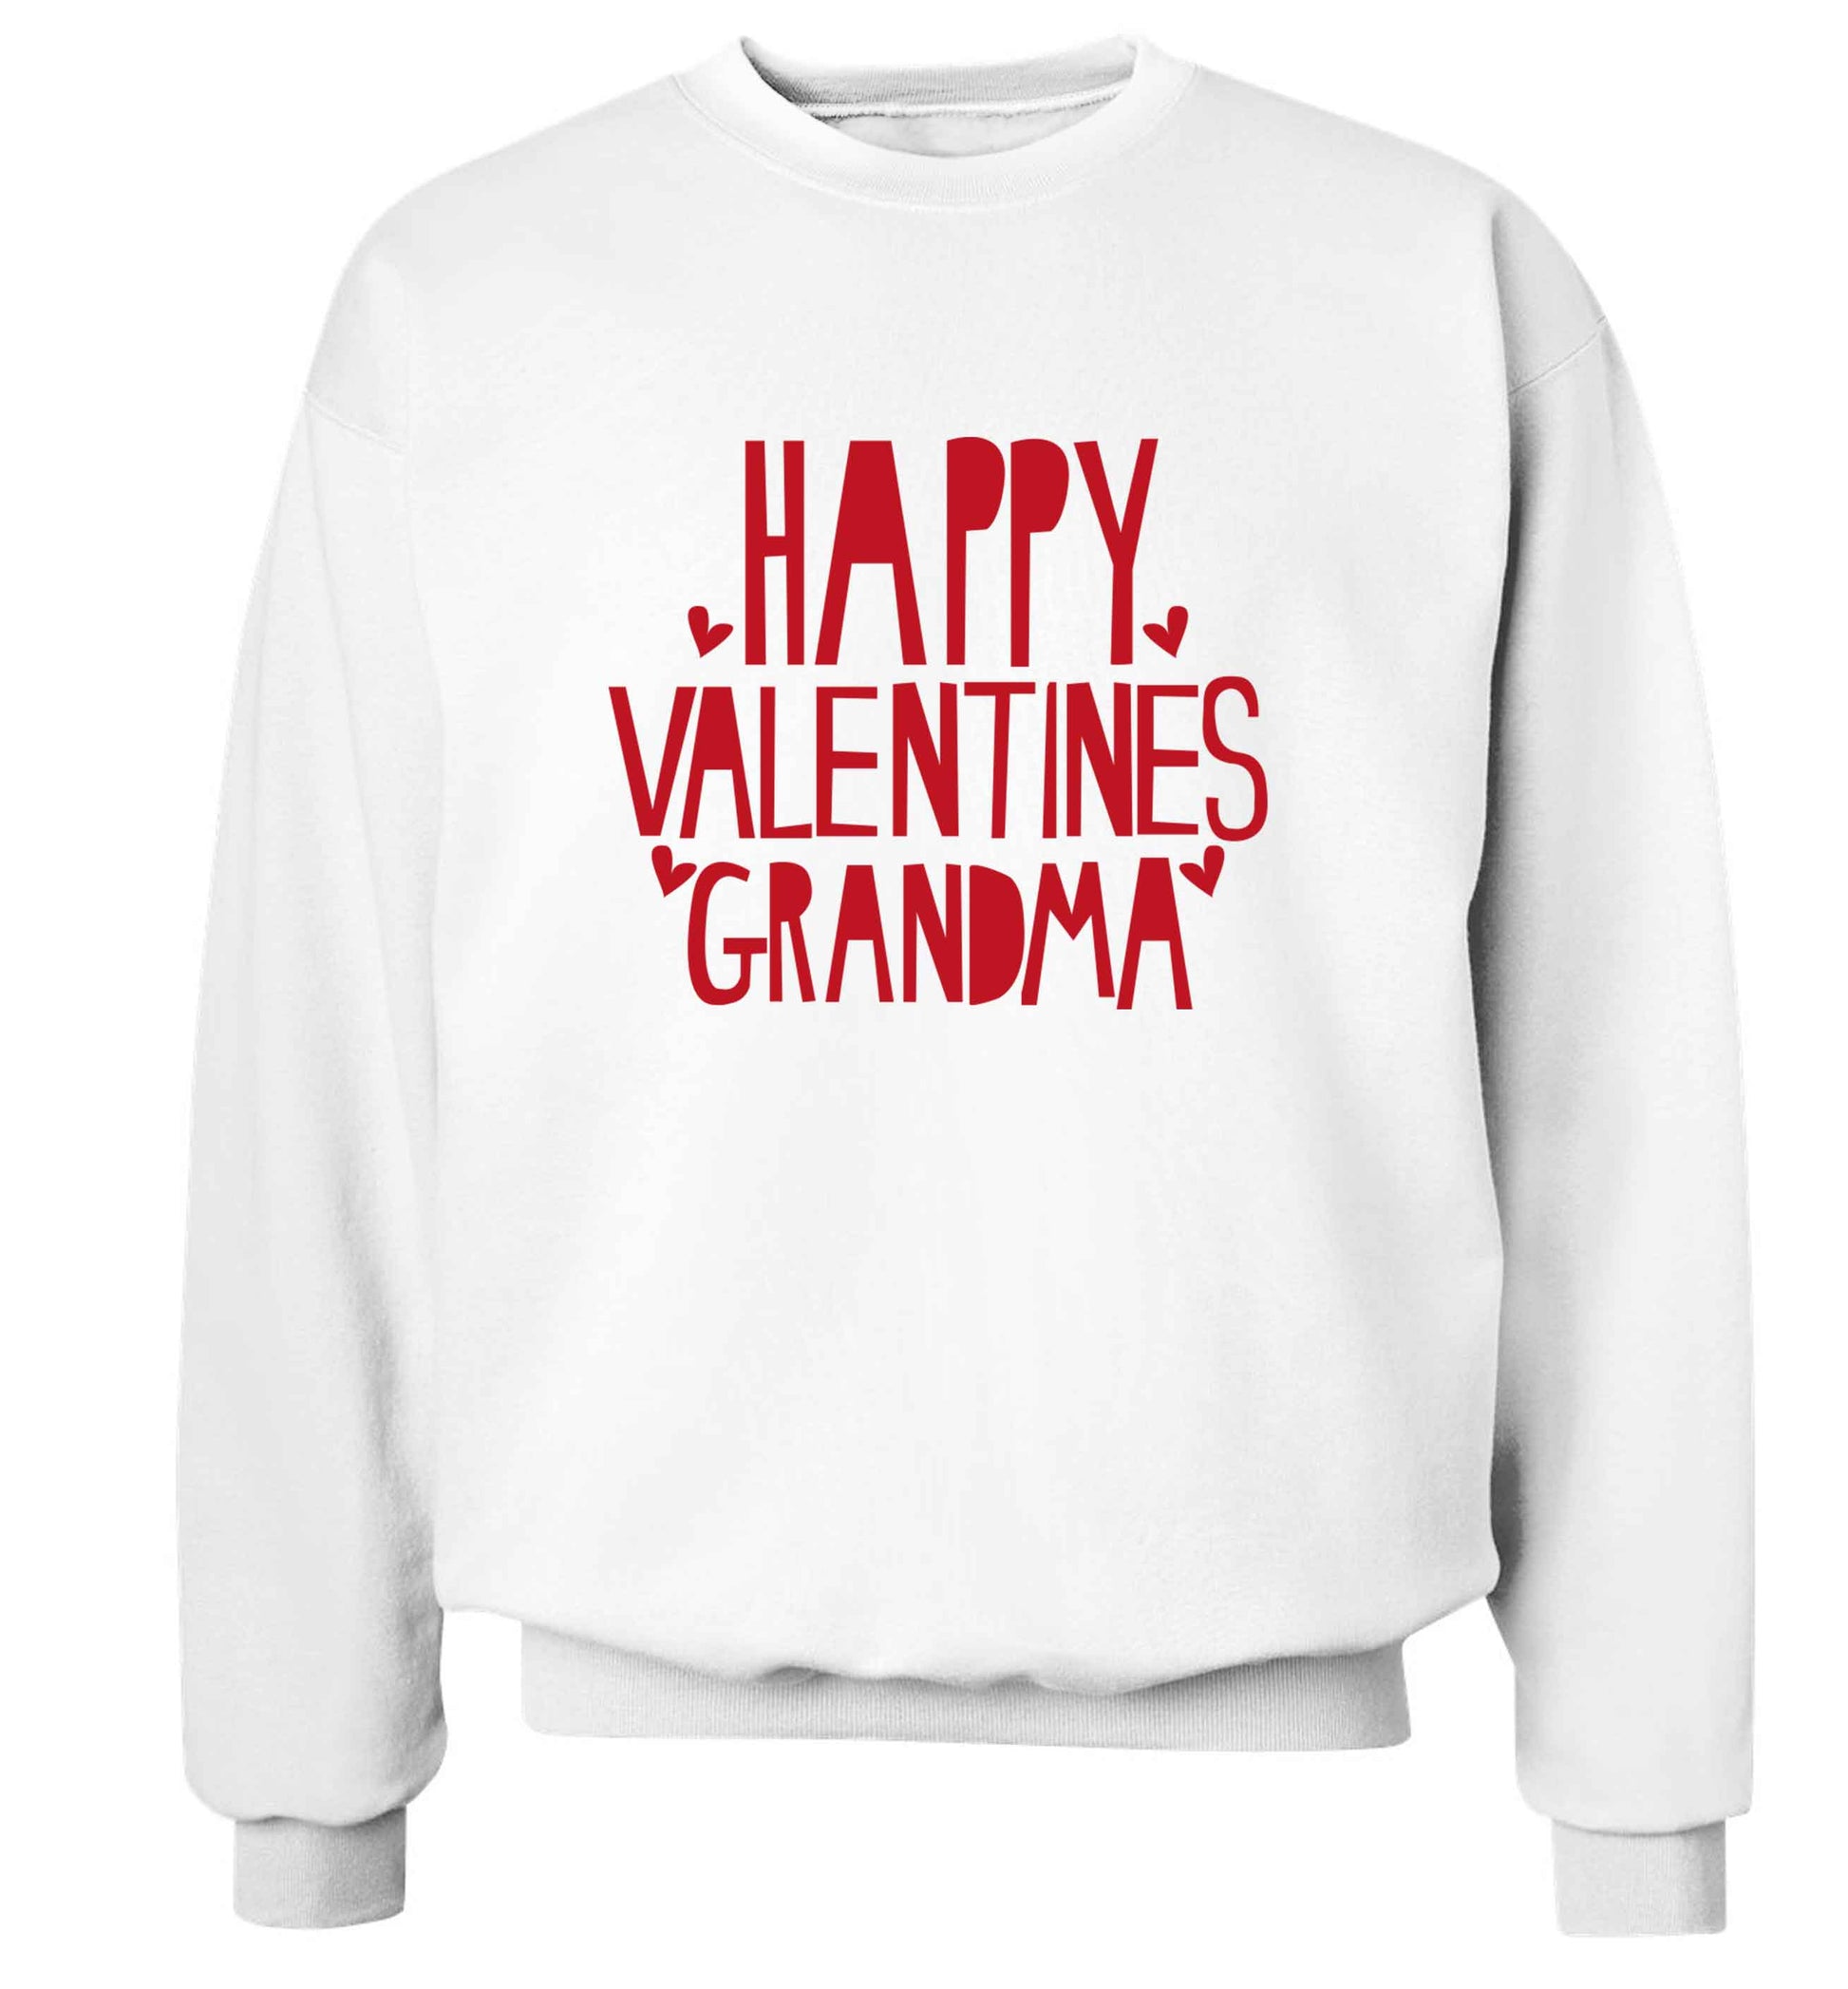 Happy valentines grandma adult's unisex white sweater 2XL